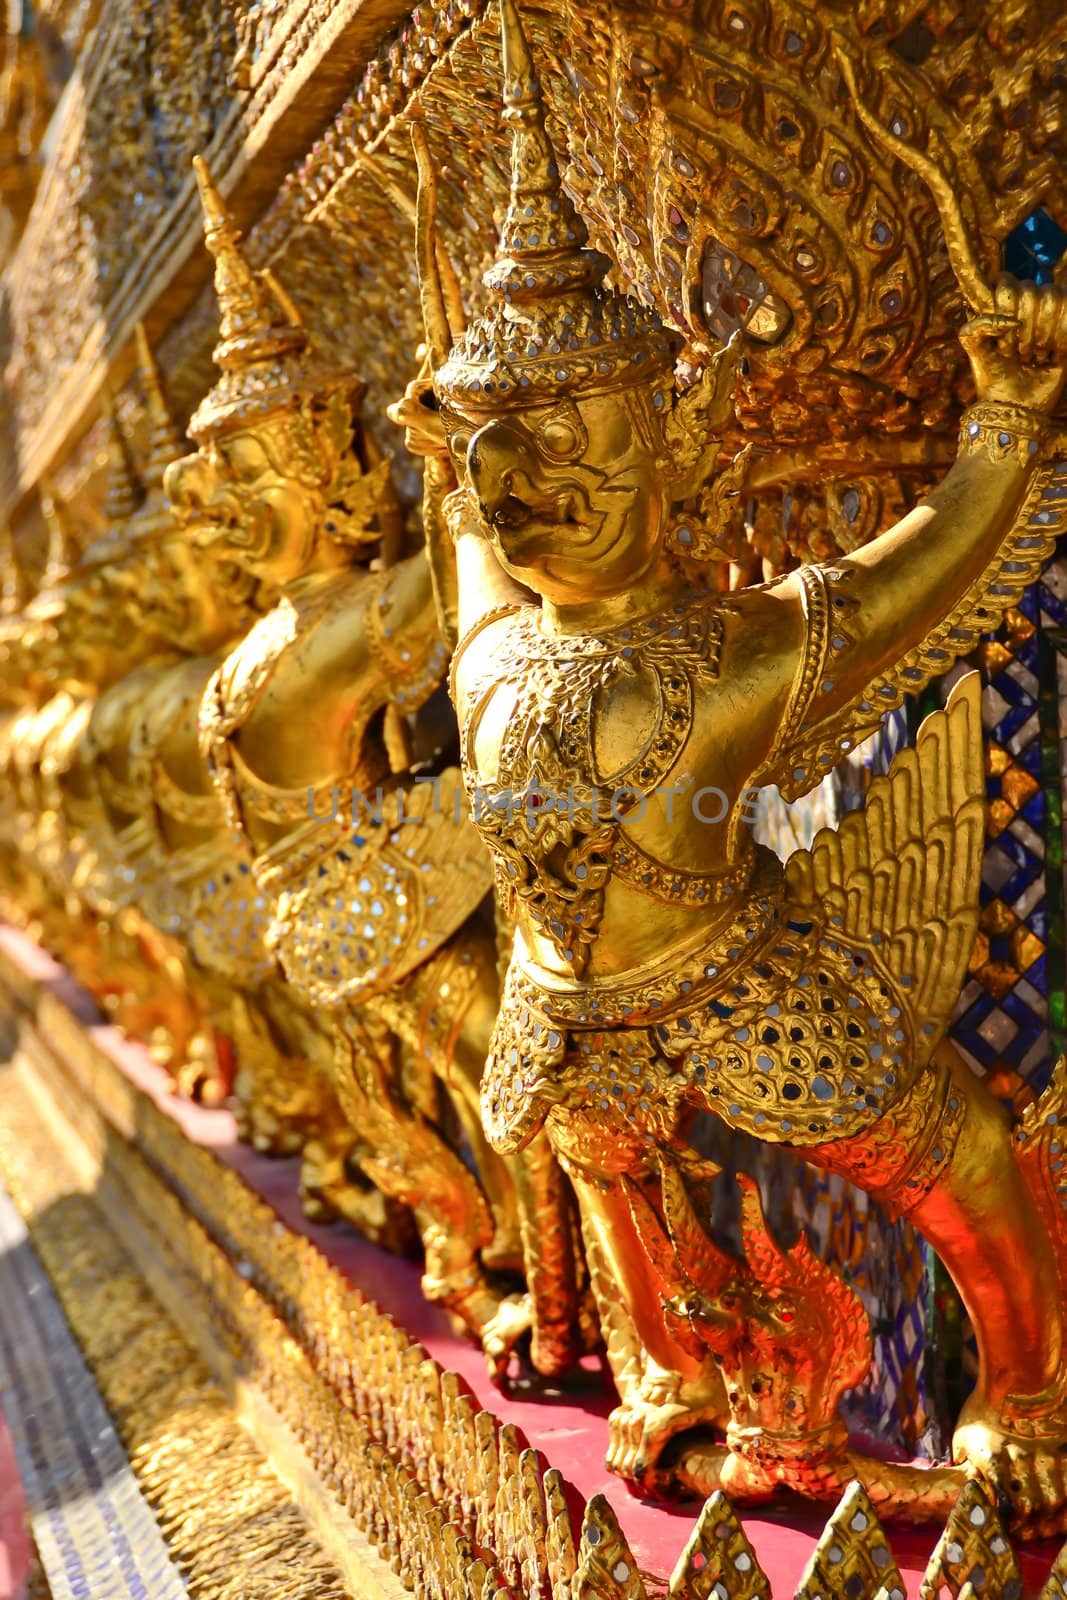 Garuda at wat pra kaew in thailand by myibean